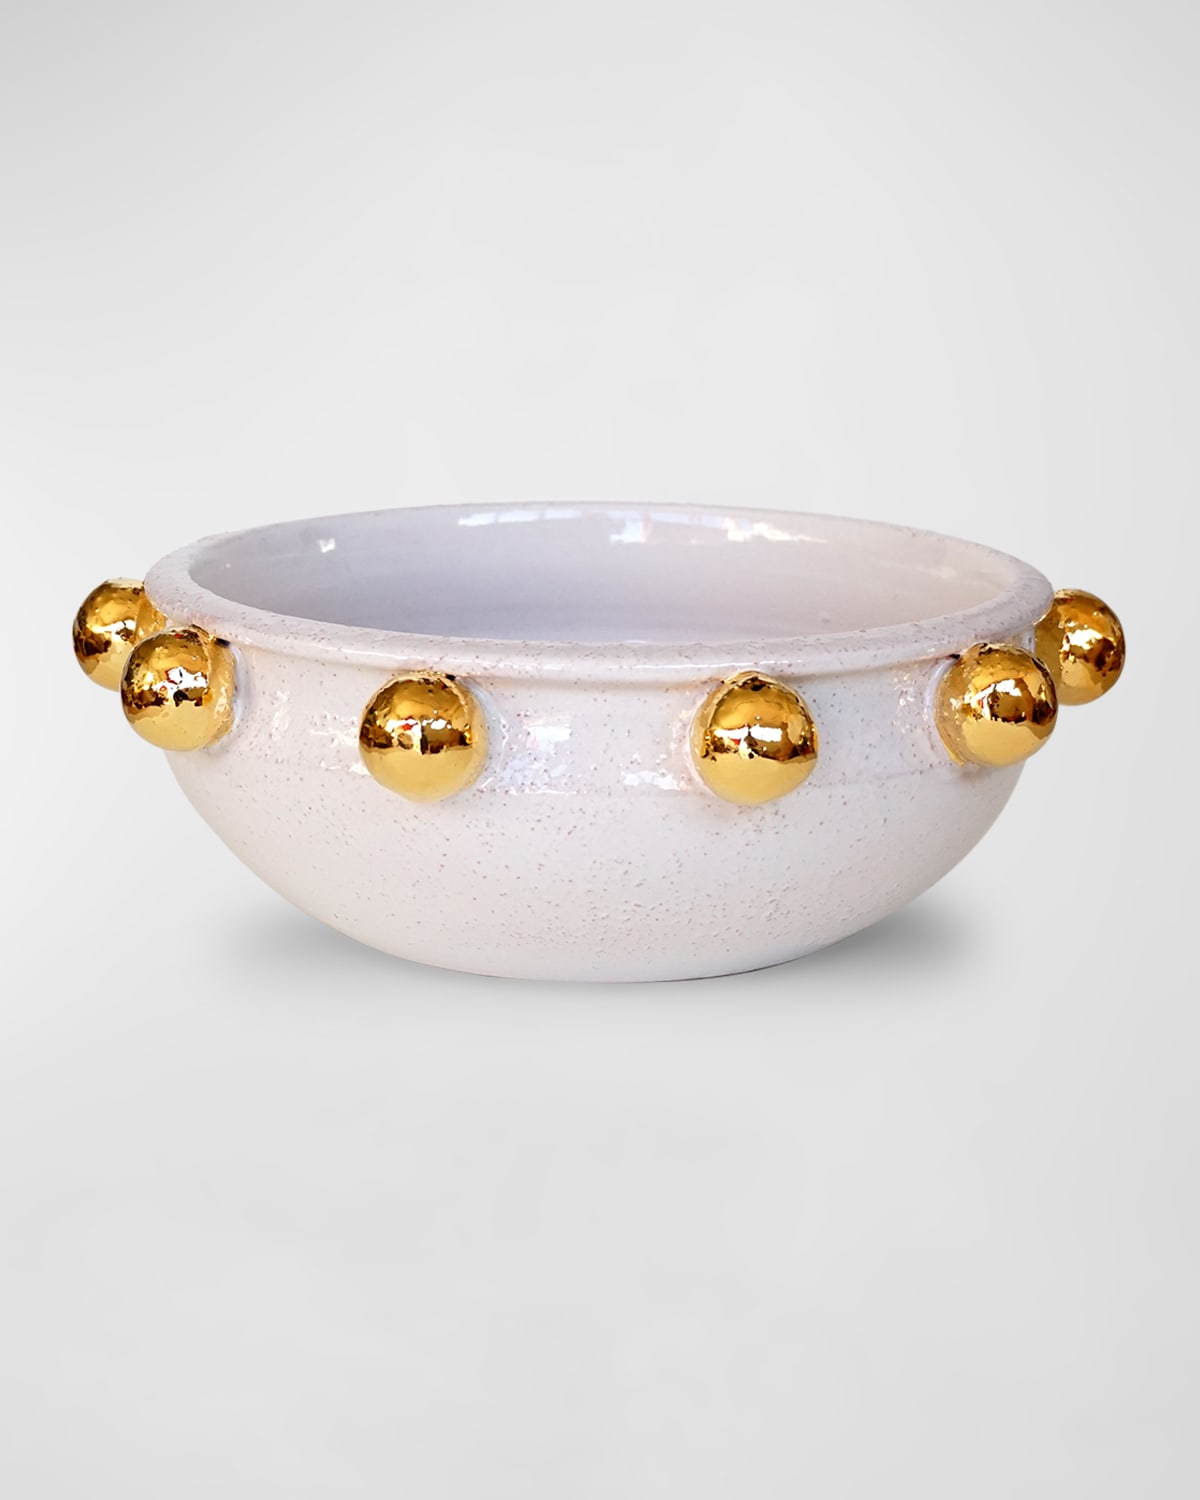 Ceramic Centerpiece W/ Golden Spheres